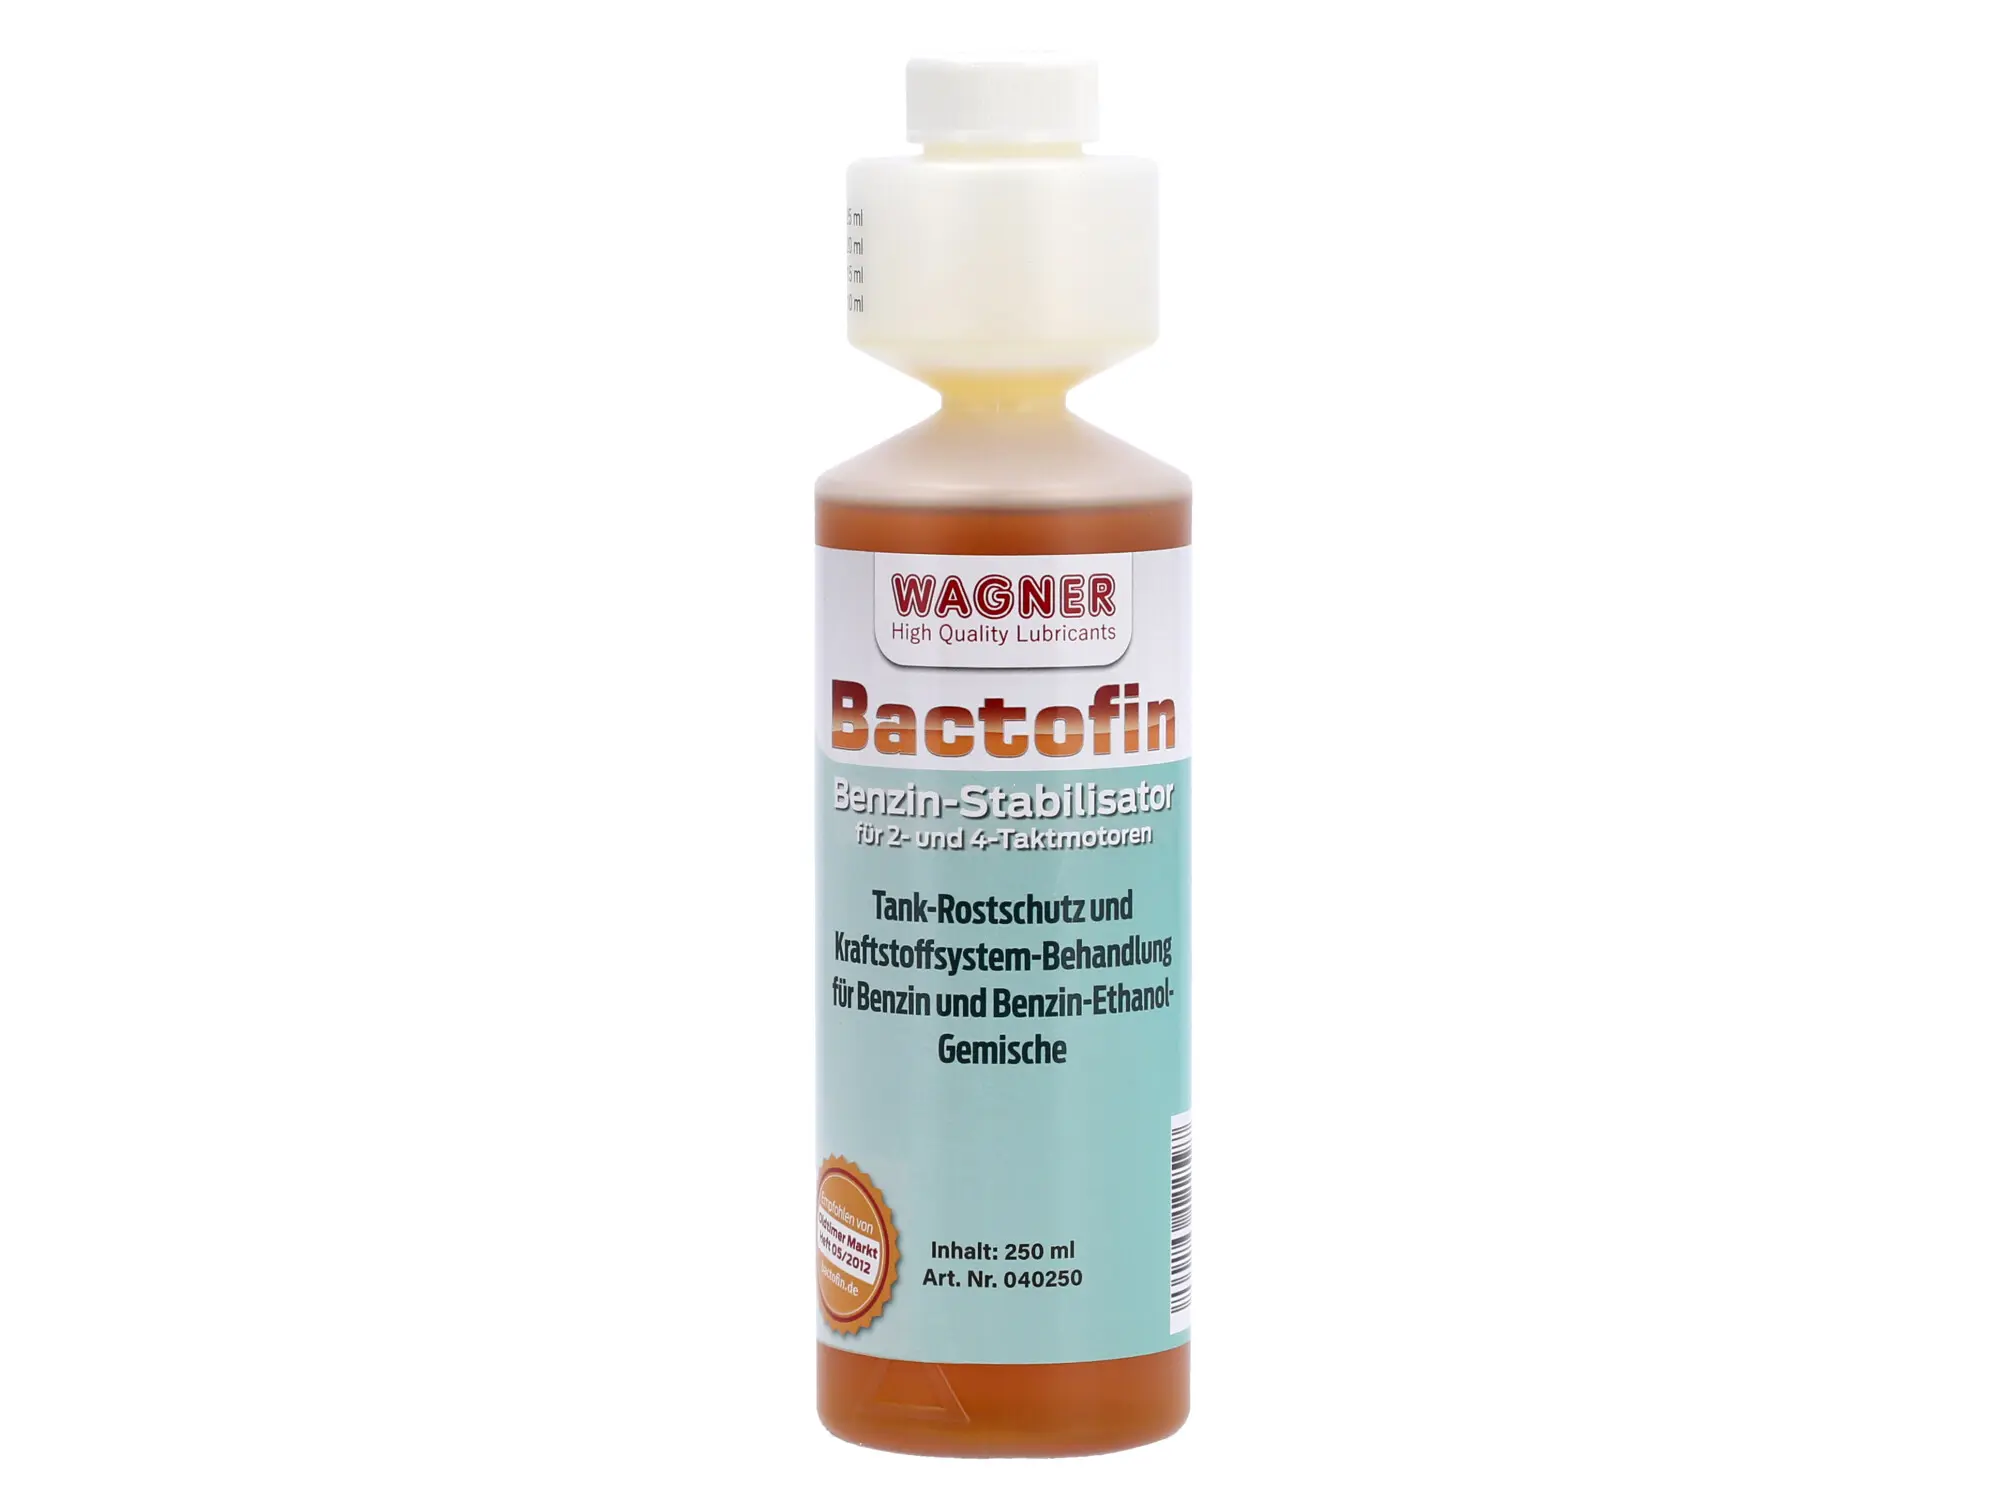 Bactofin Benzin-Additiv Konzentrat Wagner - 250ml, Item no: 10078347 - Image 1